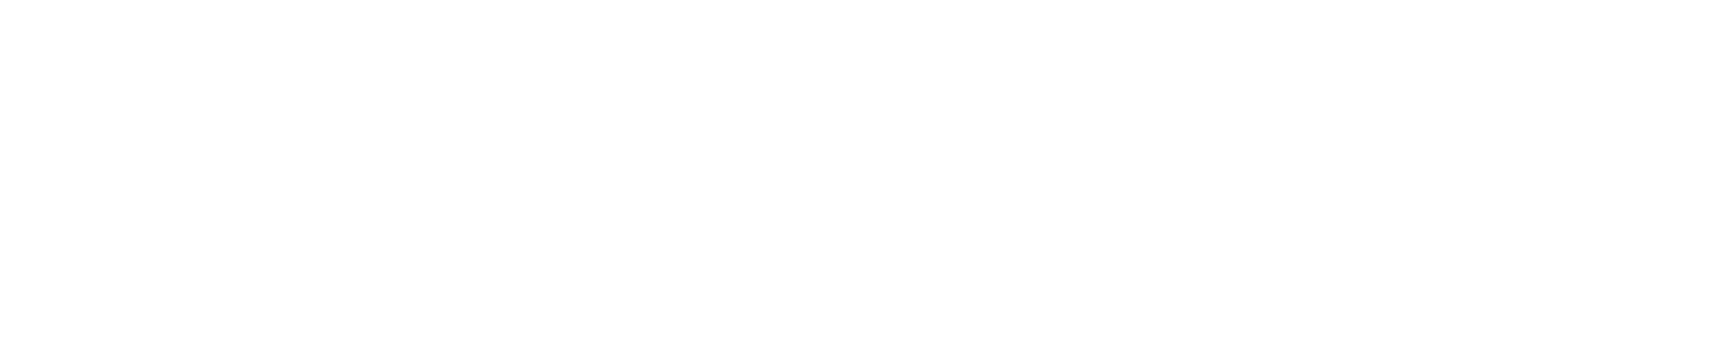 samsung-logo-white.png